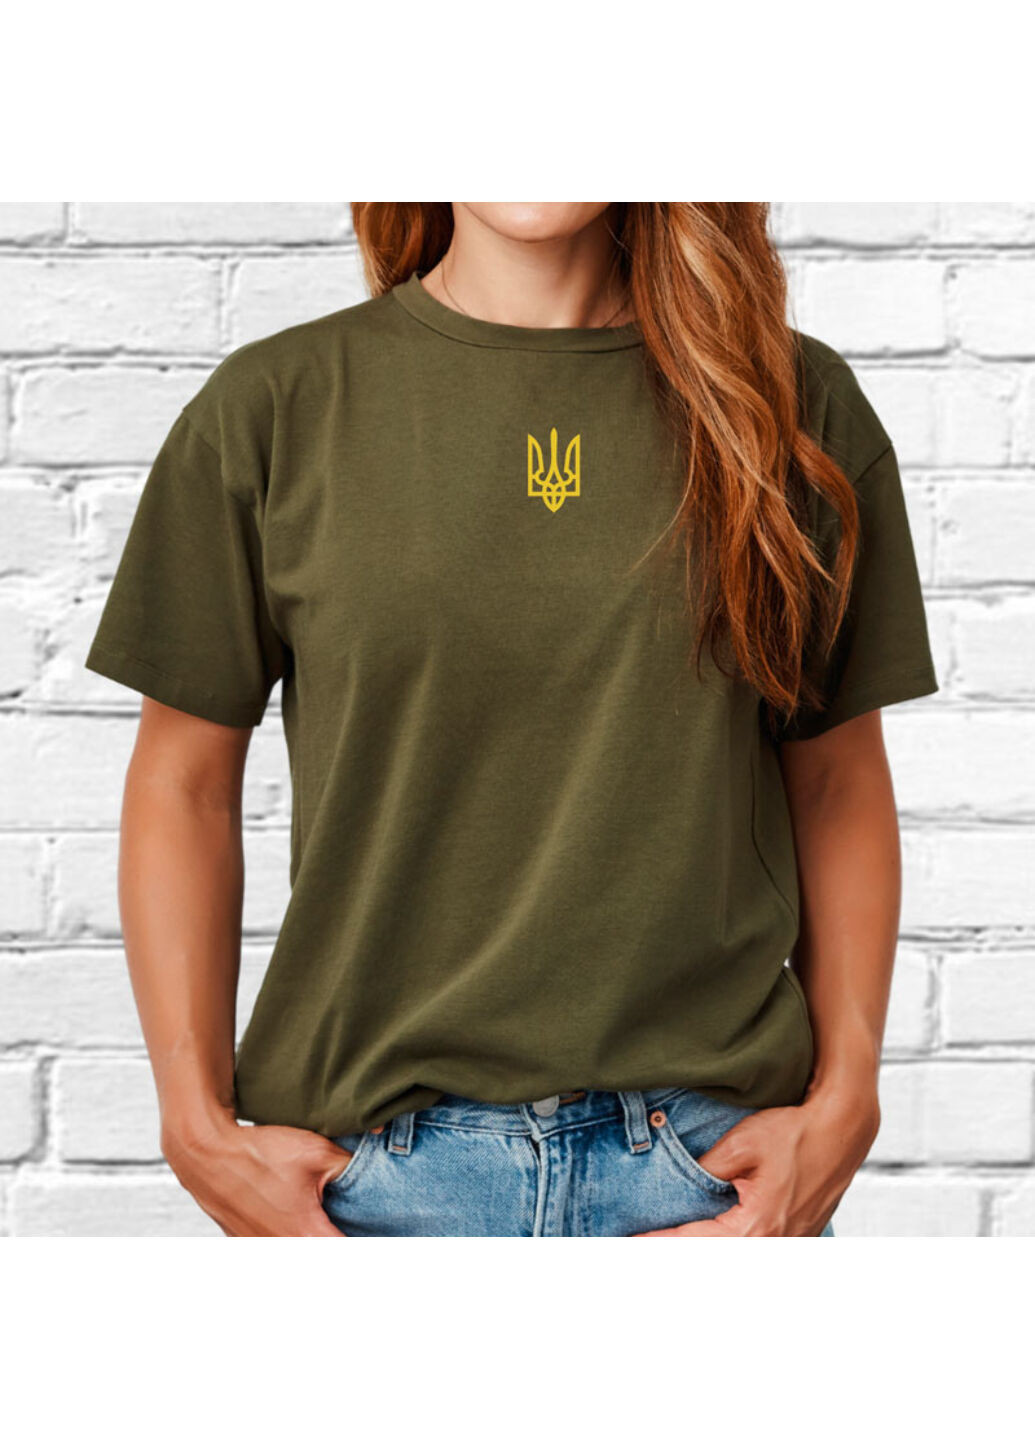 Хаки (оливковая) футболка з вишивкою золотого тризуба женская хаки 2xl No Brand